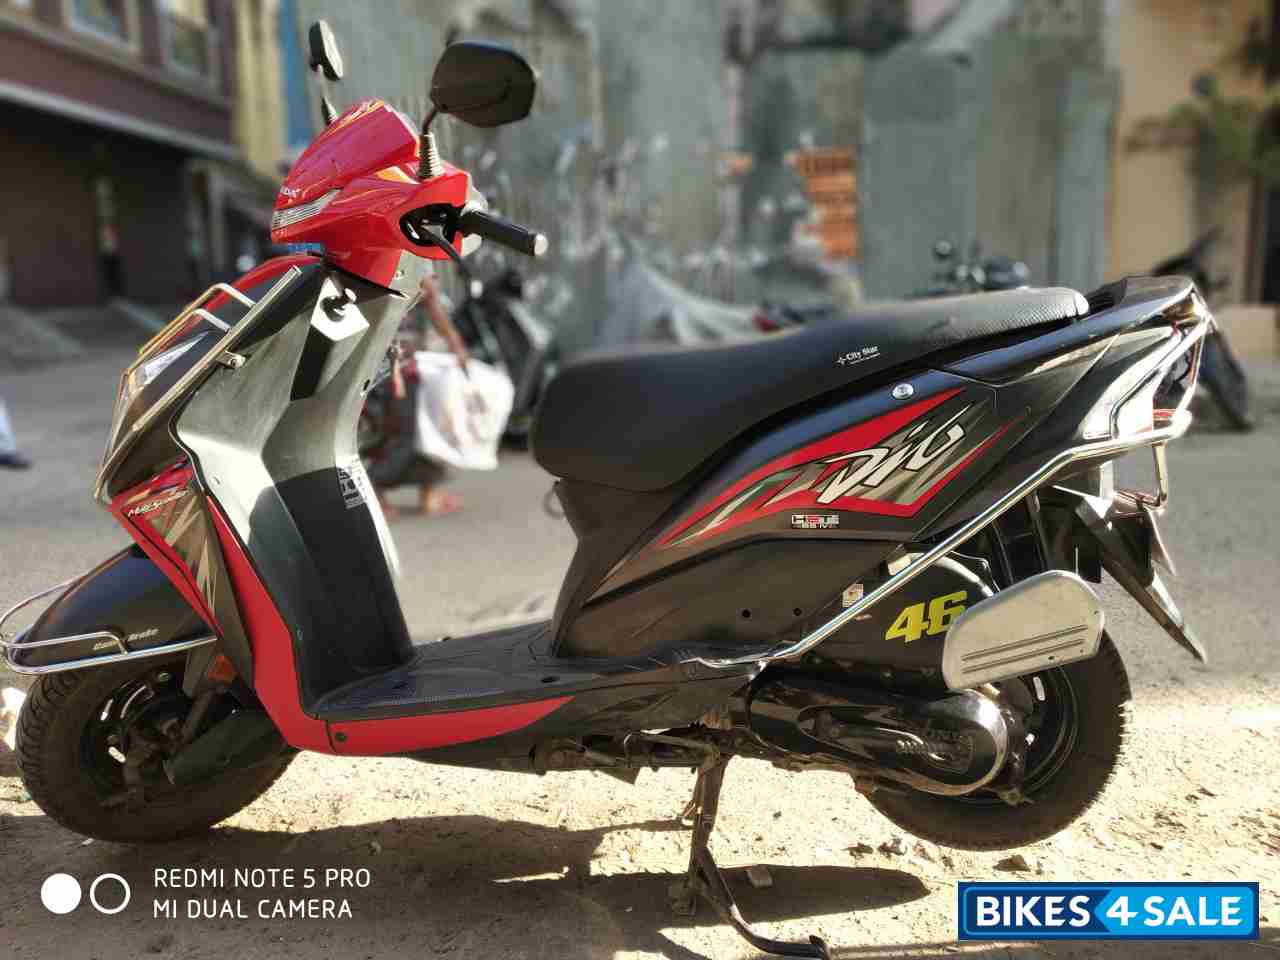 New Honda Dio Bike Price